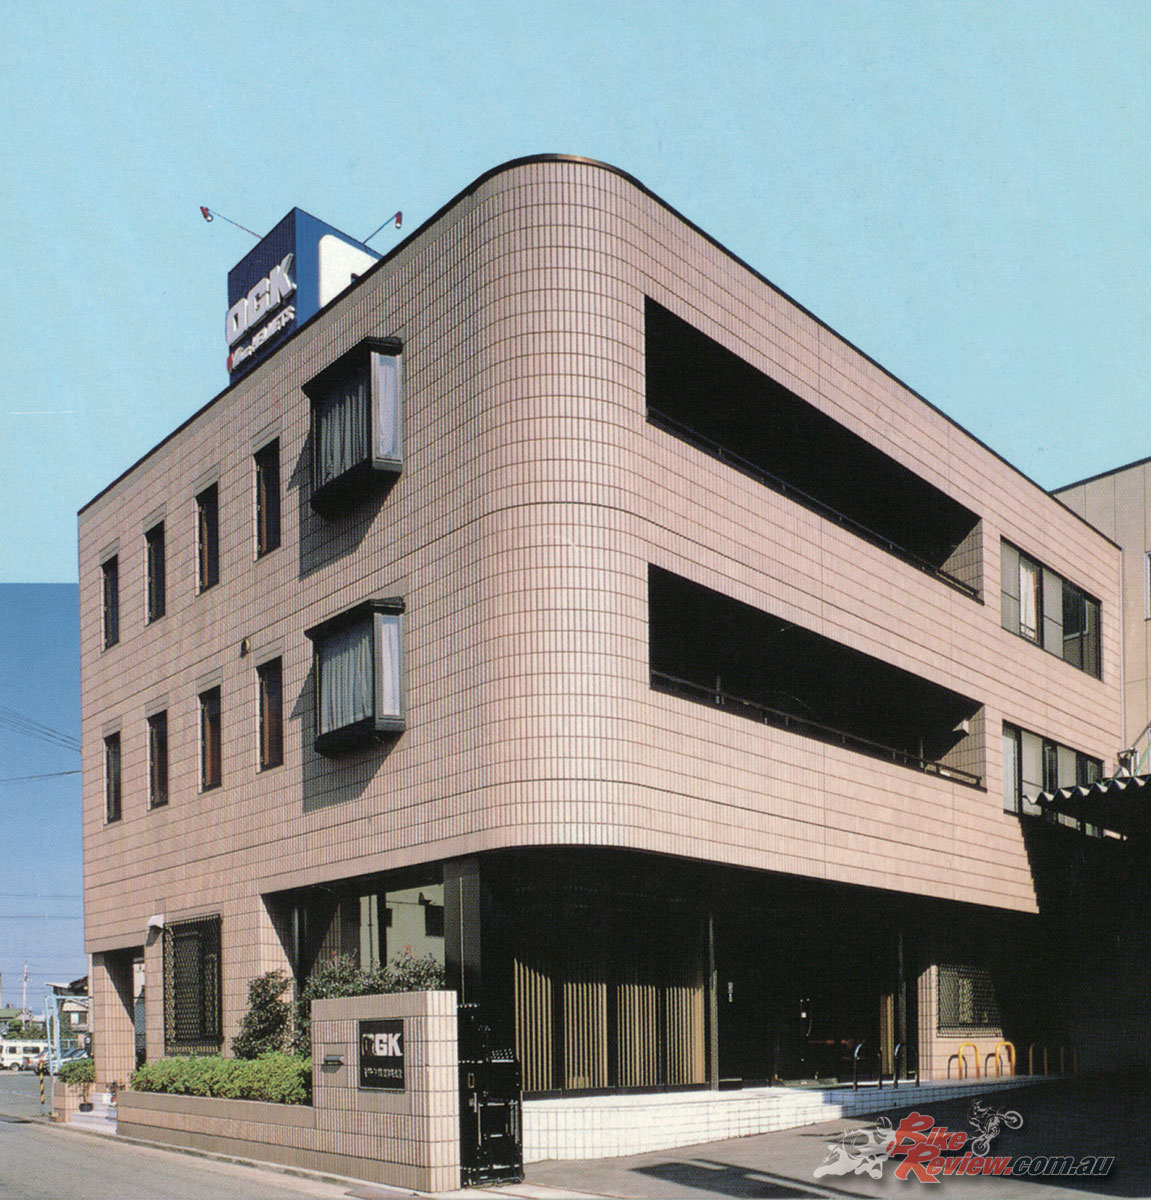 Kabuto's Mikuriya Head Office opened in 1986